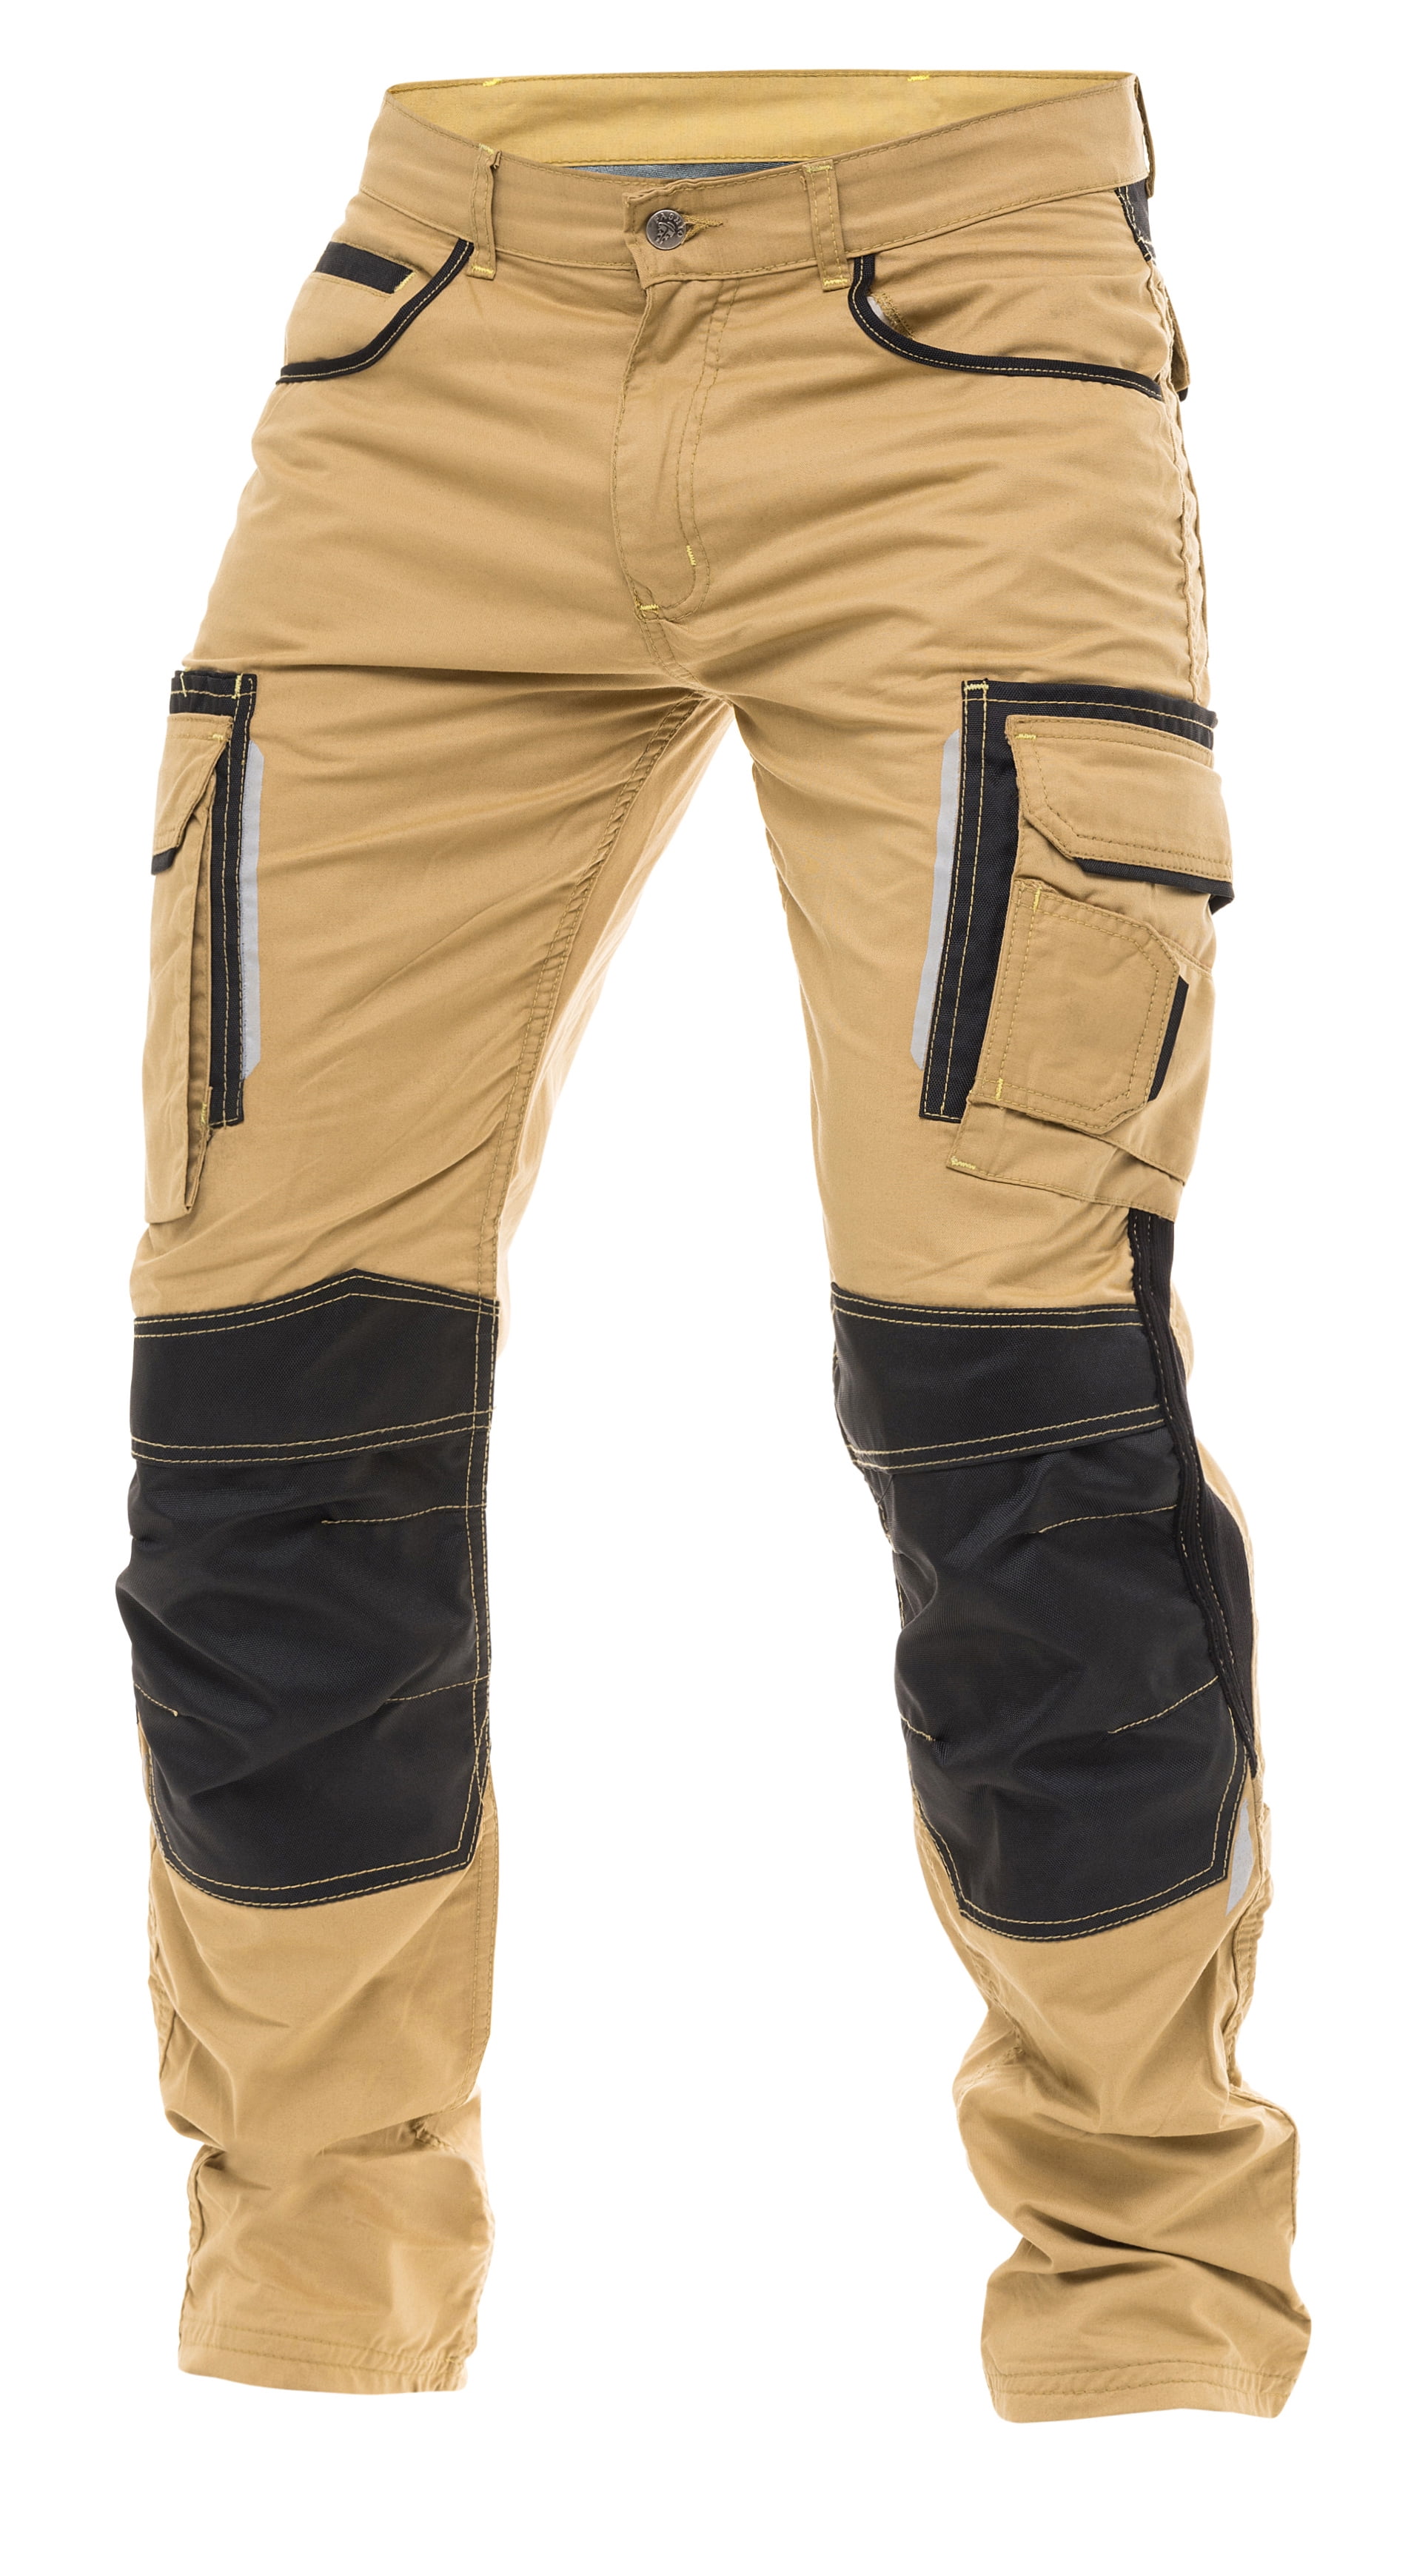 Mens Construction Pants Utility Work Heavy Duty Workwear Trousers